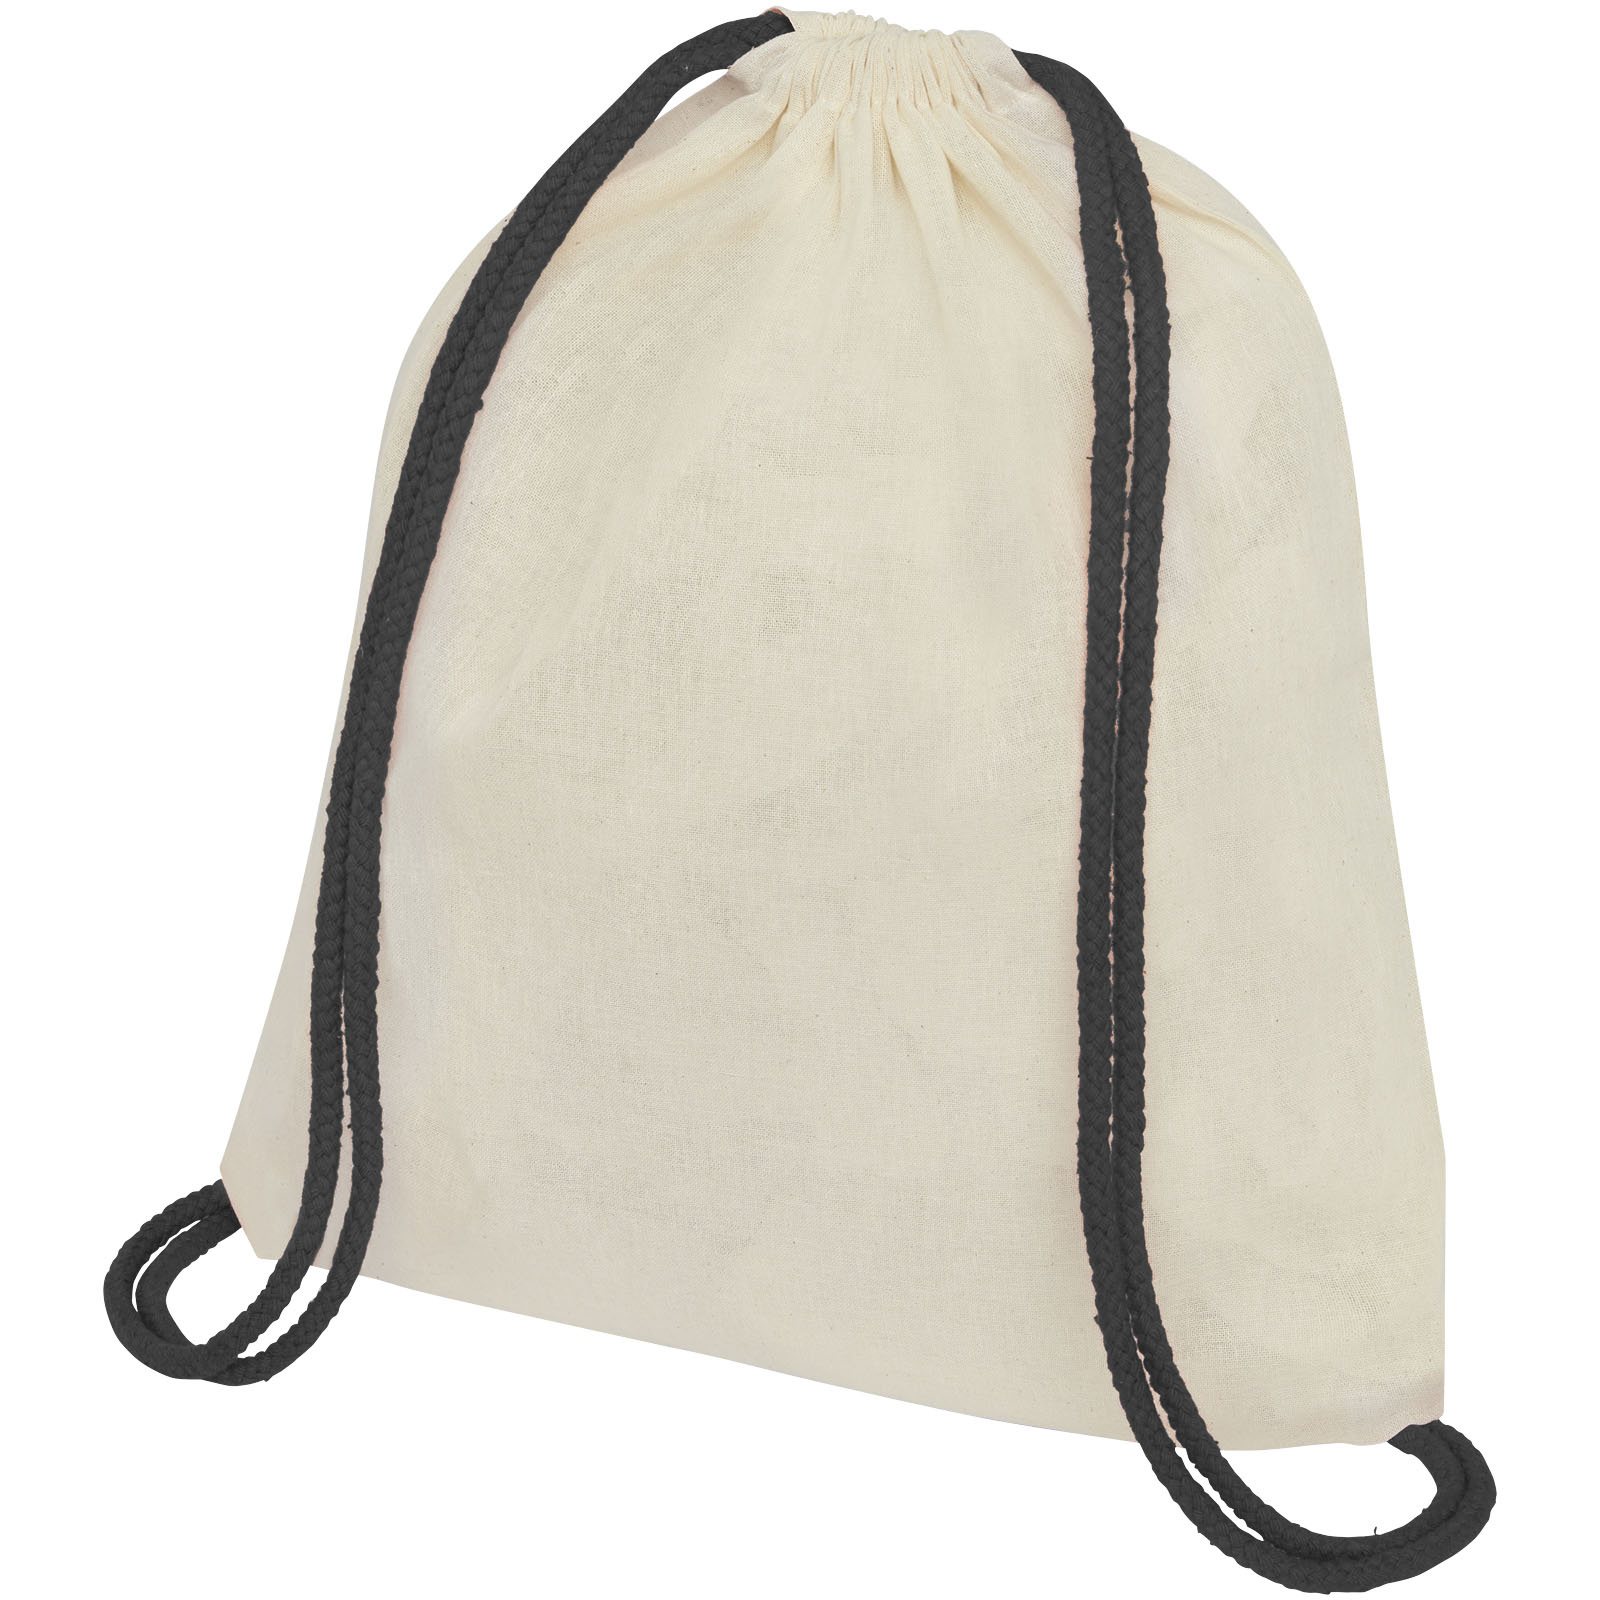 Bags - Oregon 100 g/m² cotton drawstring bag with coloured cords 5L